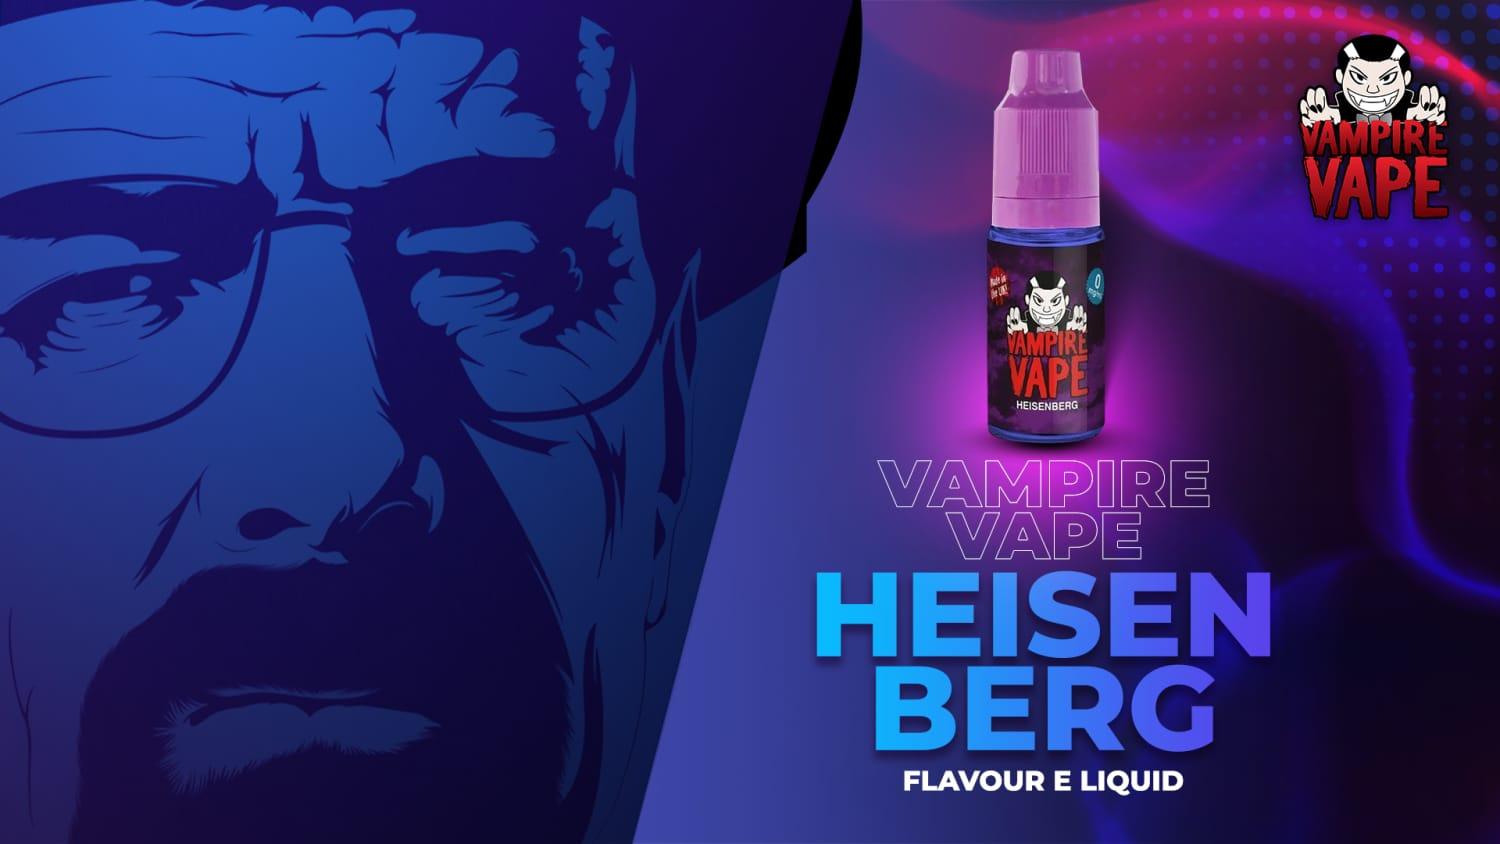 Heisenberg Vampire Vape: Award-Winning E-Liquid - Brand:Vampire Vape, Category:E-Liquids, Sub Category:Starter Liquids